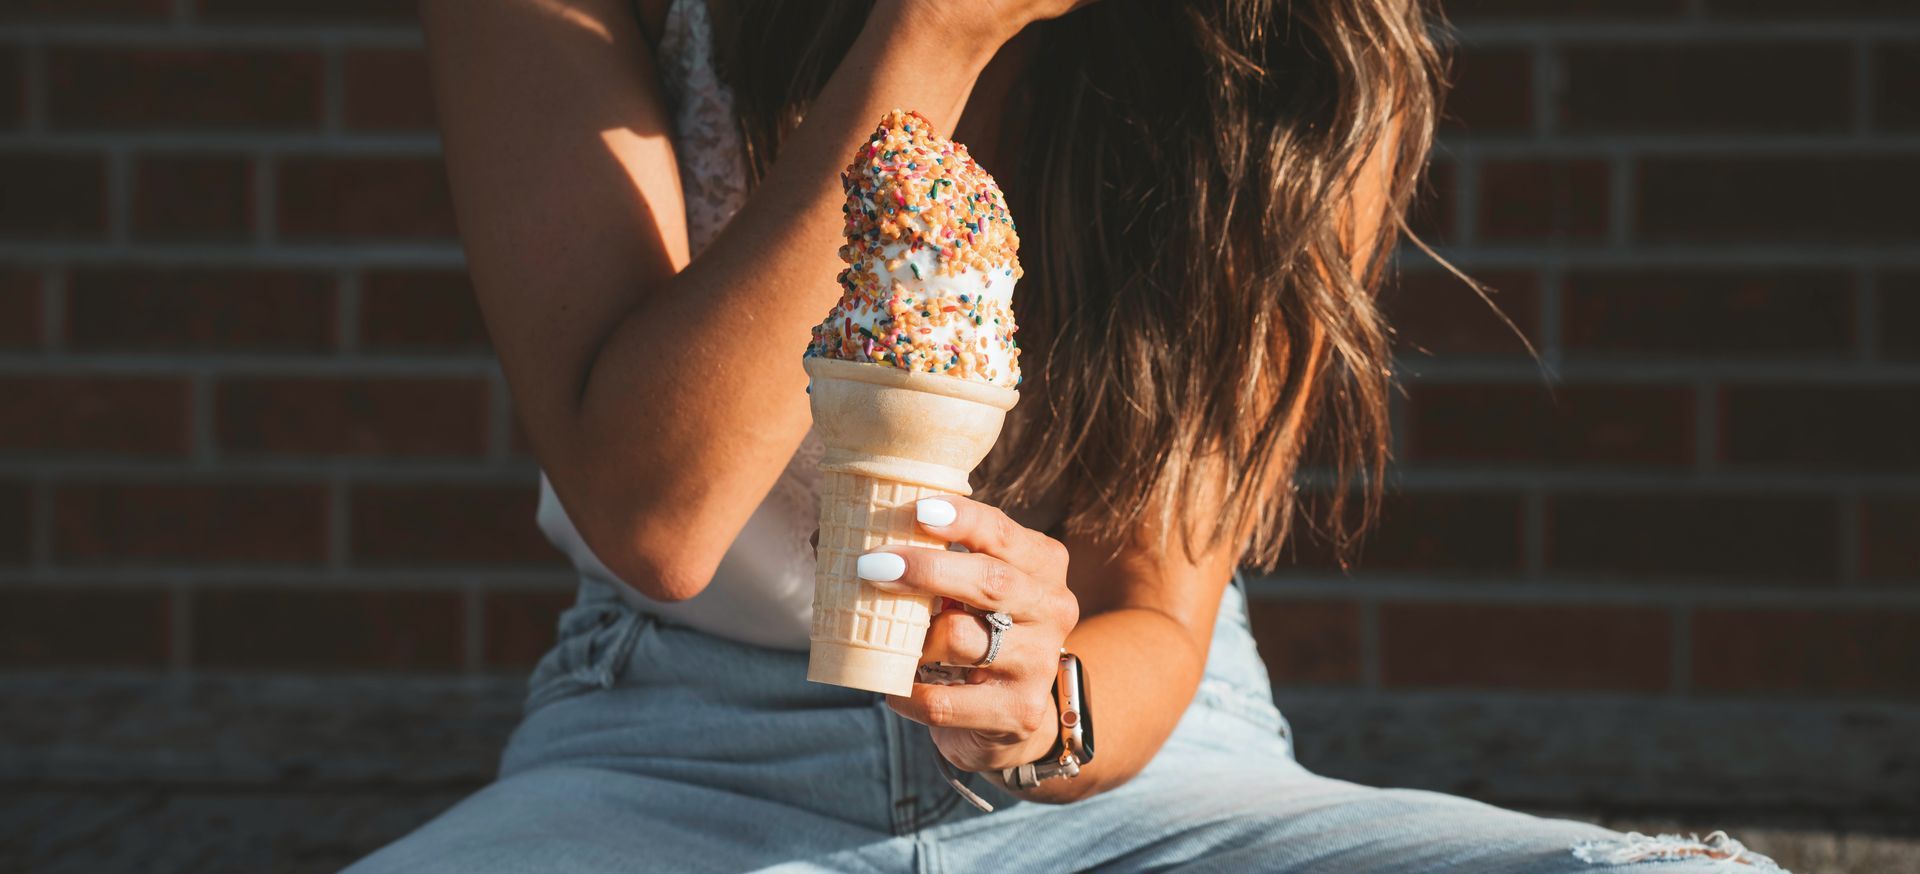 woman eating ice cream cone